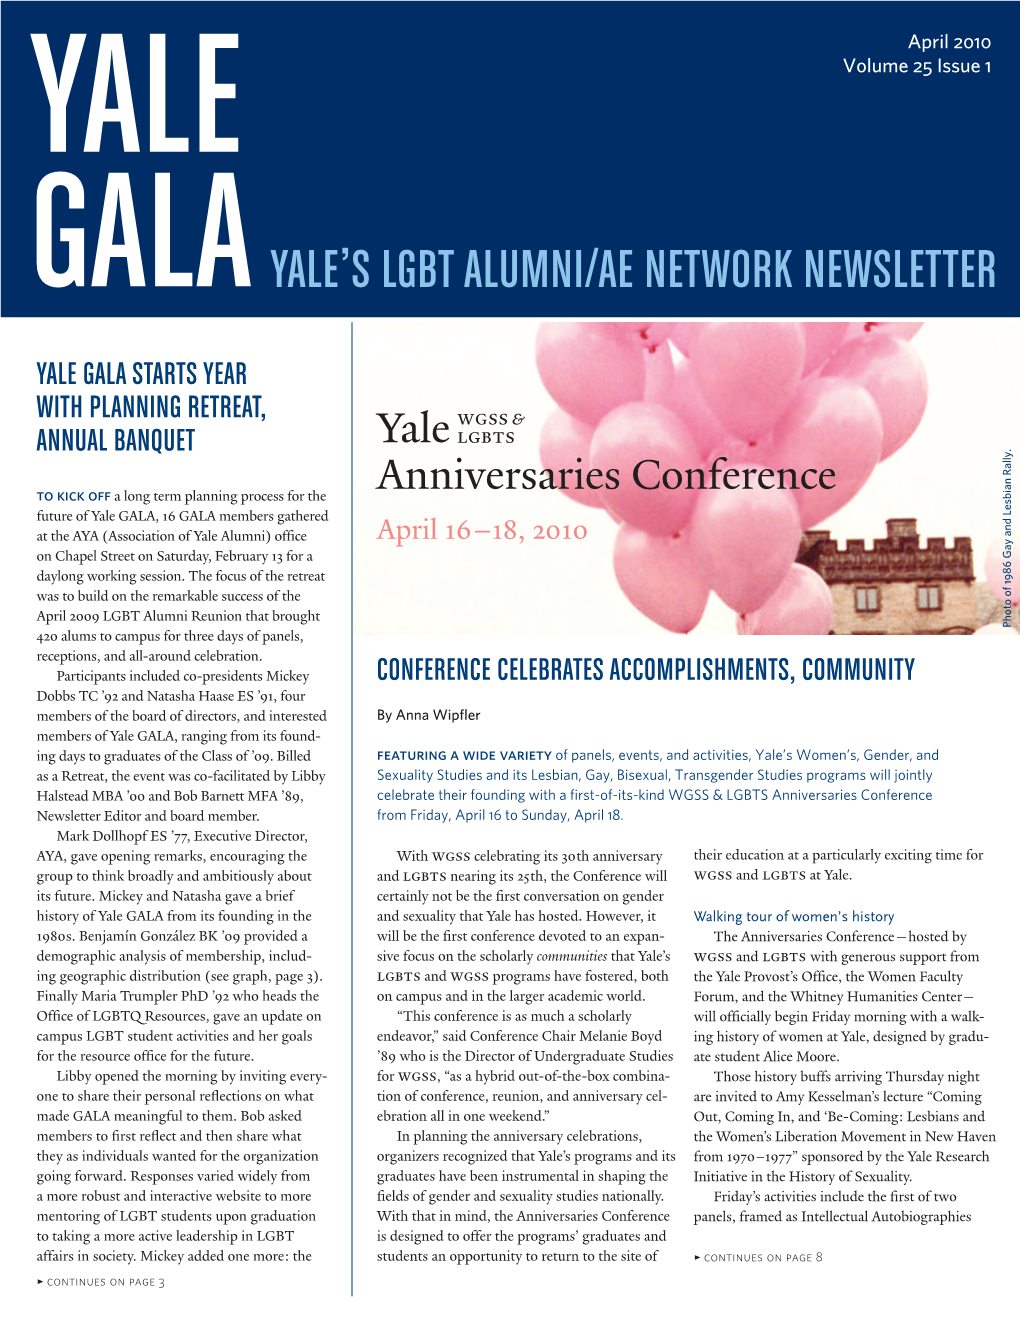 Galayale's Lgbt Alumni/Ae Network Newsletter